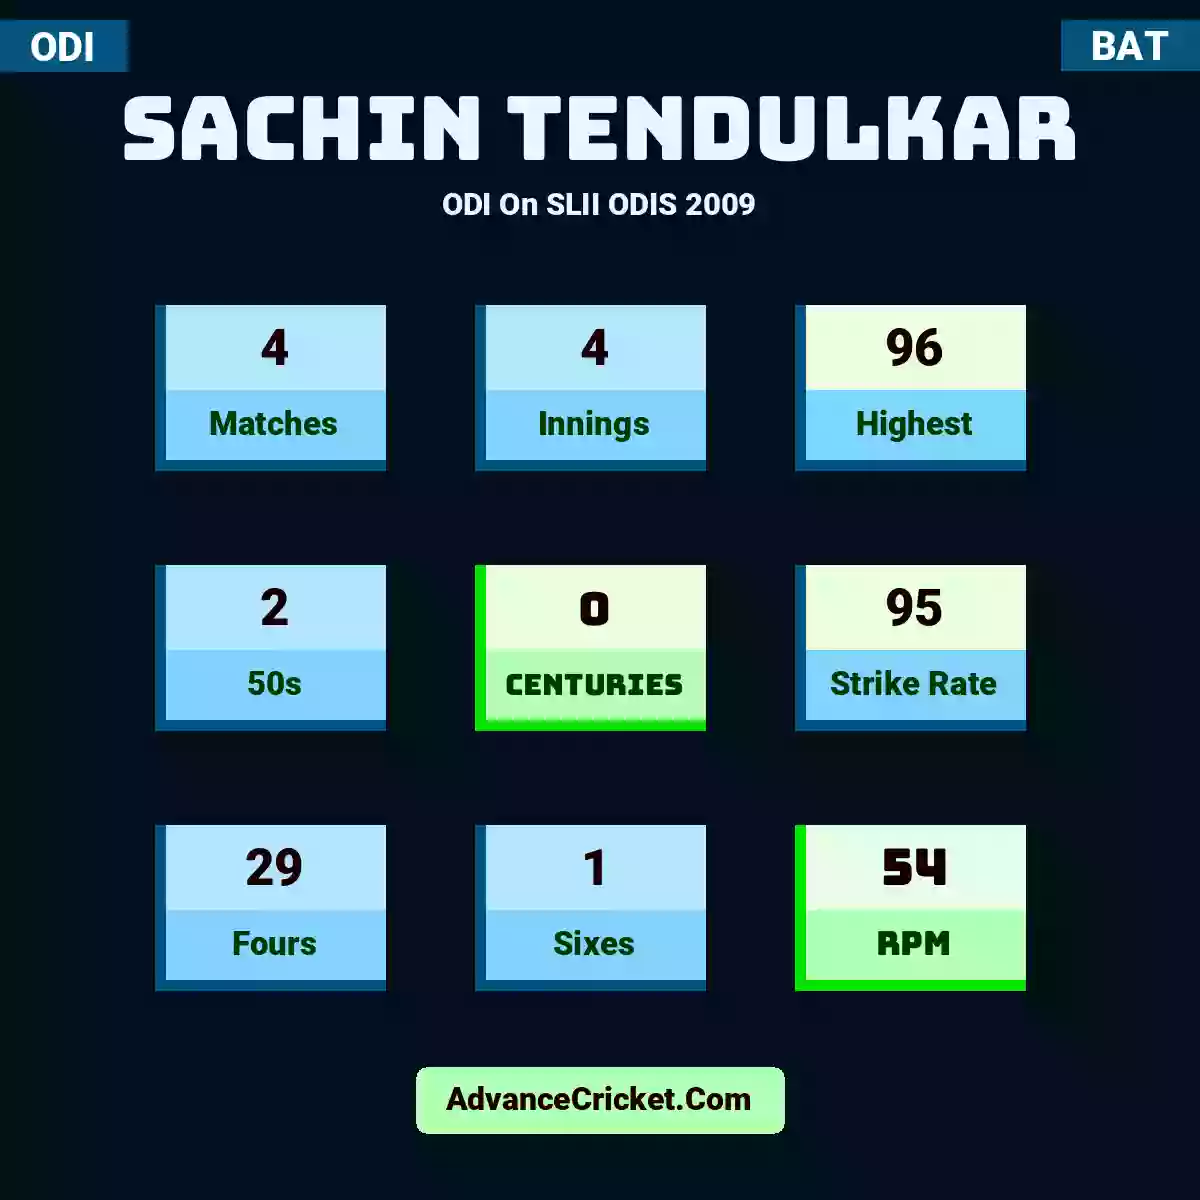 Sachin Tendulkar ODI  On SLII ODIS 2009, Sachin Tendulkar played 4 matches, scored 96 runs as highest, 2 half-centuries, and 0 centuries, with a strike rate of 95. S.Tendulkar hit 29 fours and 1 sixes, with an RPM of 54.